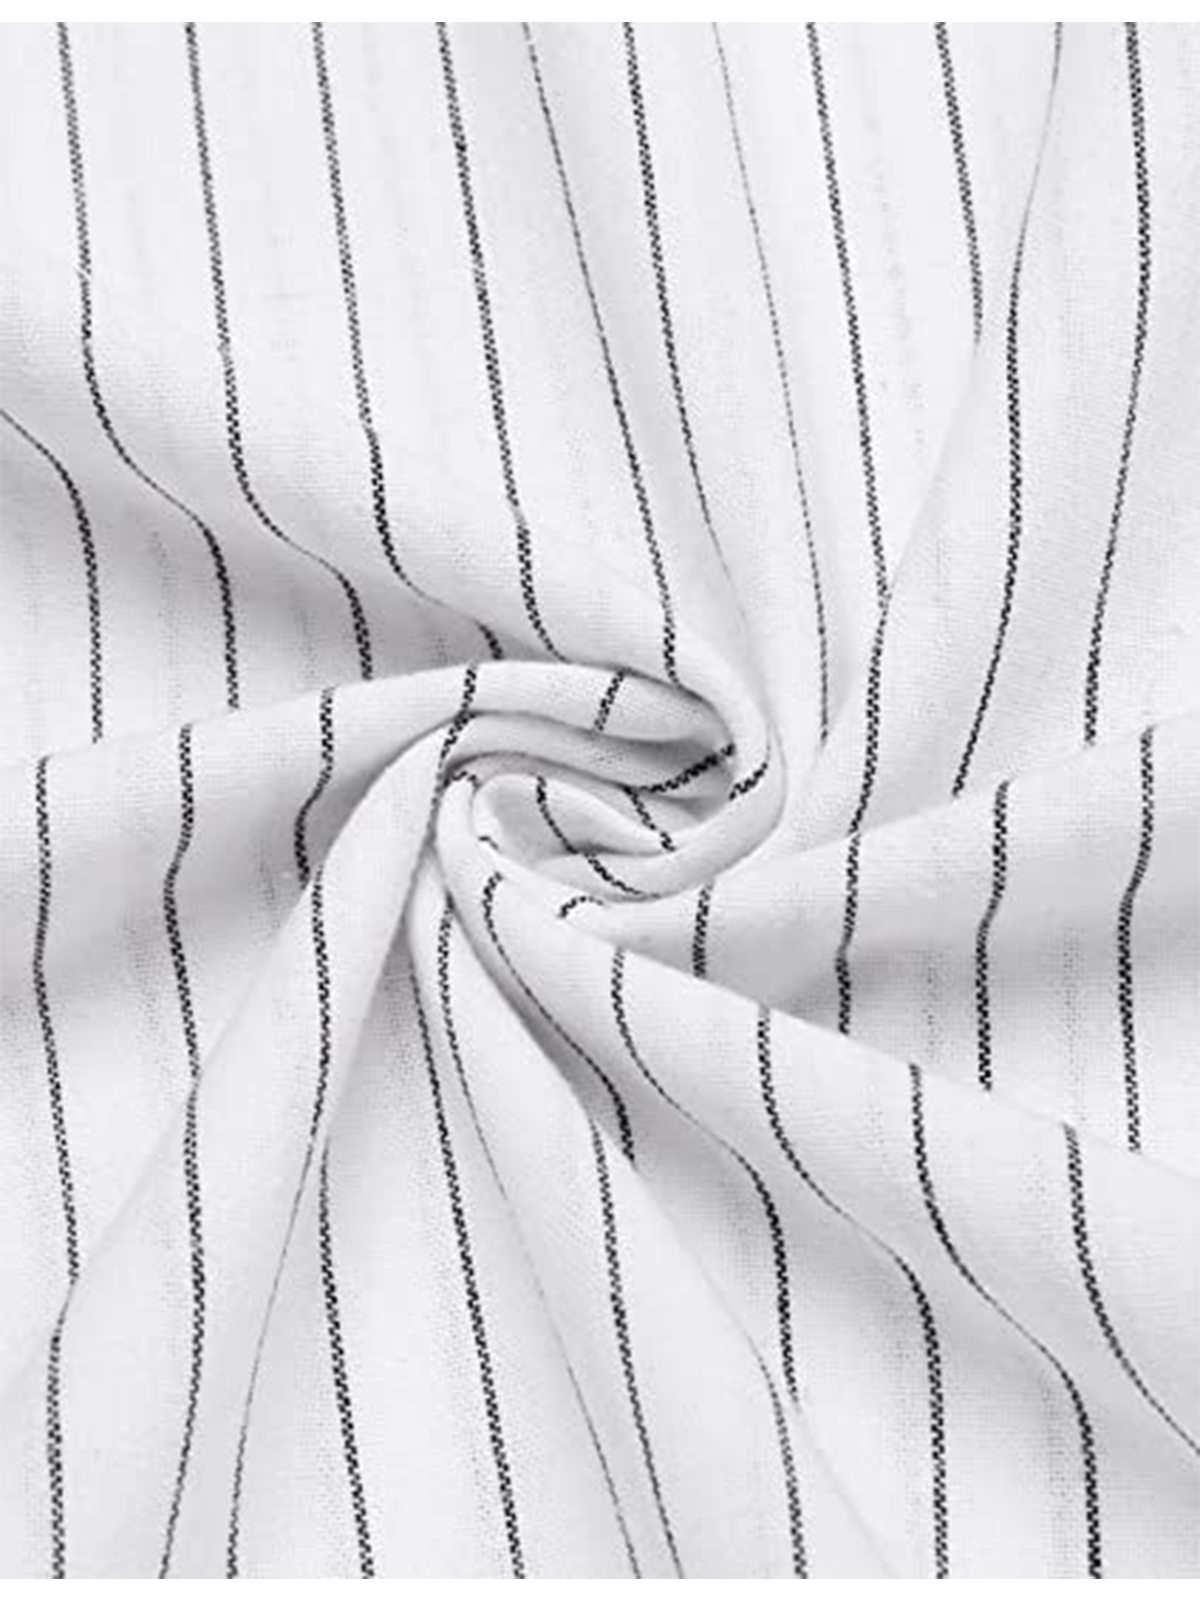 Striped Long sleeve casual shirt